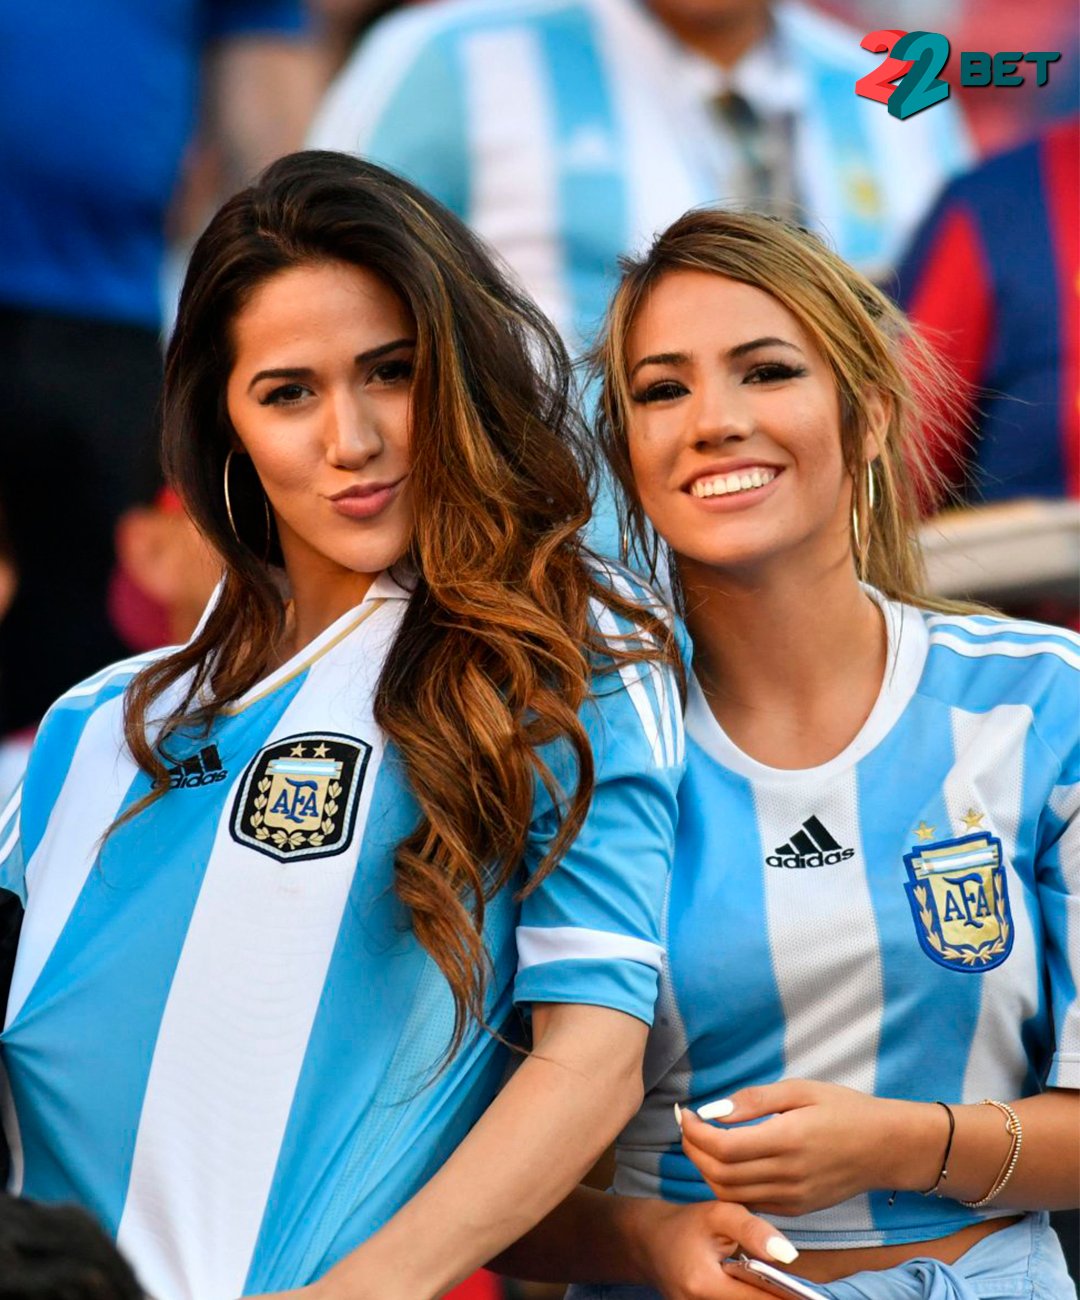 22BET on Twitter: "Look at this BEAUTIFUL football fans⚽️[PART 2]  #football #fussball #soccer #argentina #columbia #russia #girls #fan #fans  #beautiful #photos #22bet https://t.co/22XptDj7hl" / Twitter